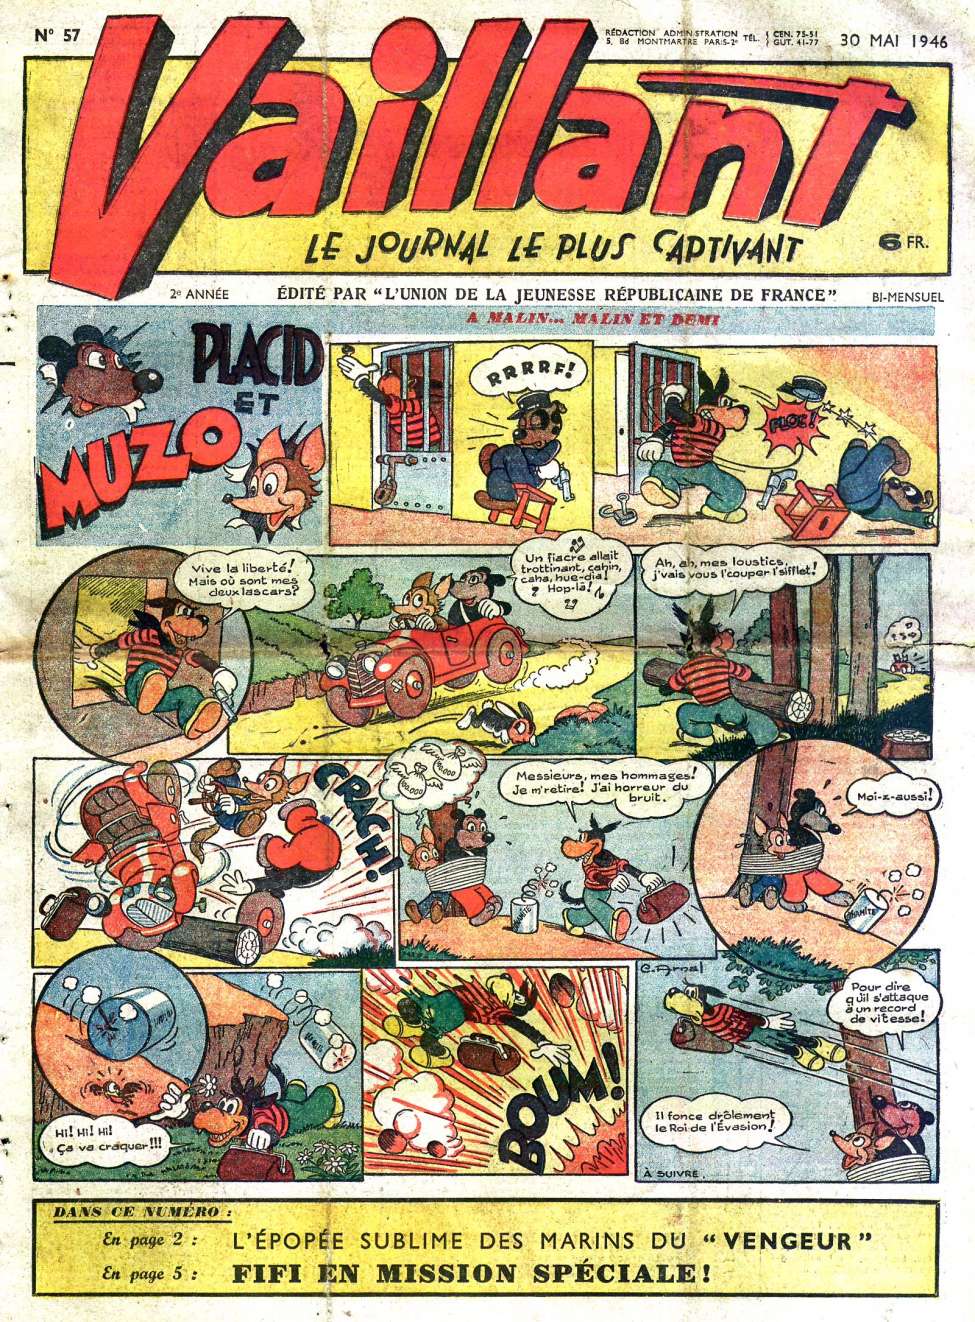 Comic Book Cover For Vaillant 57 - Placid et Muzo